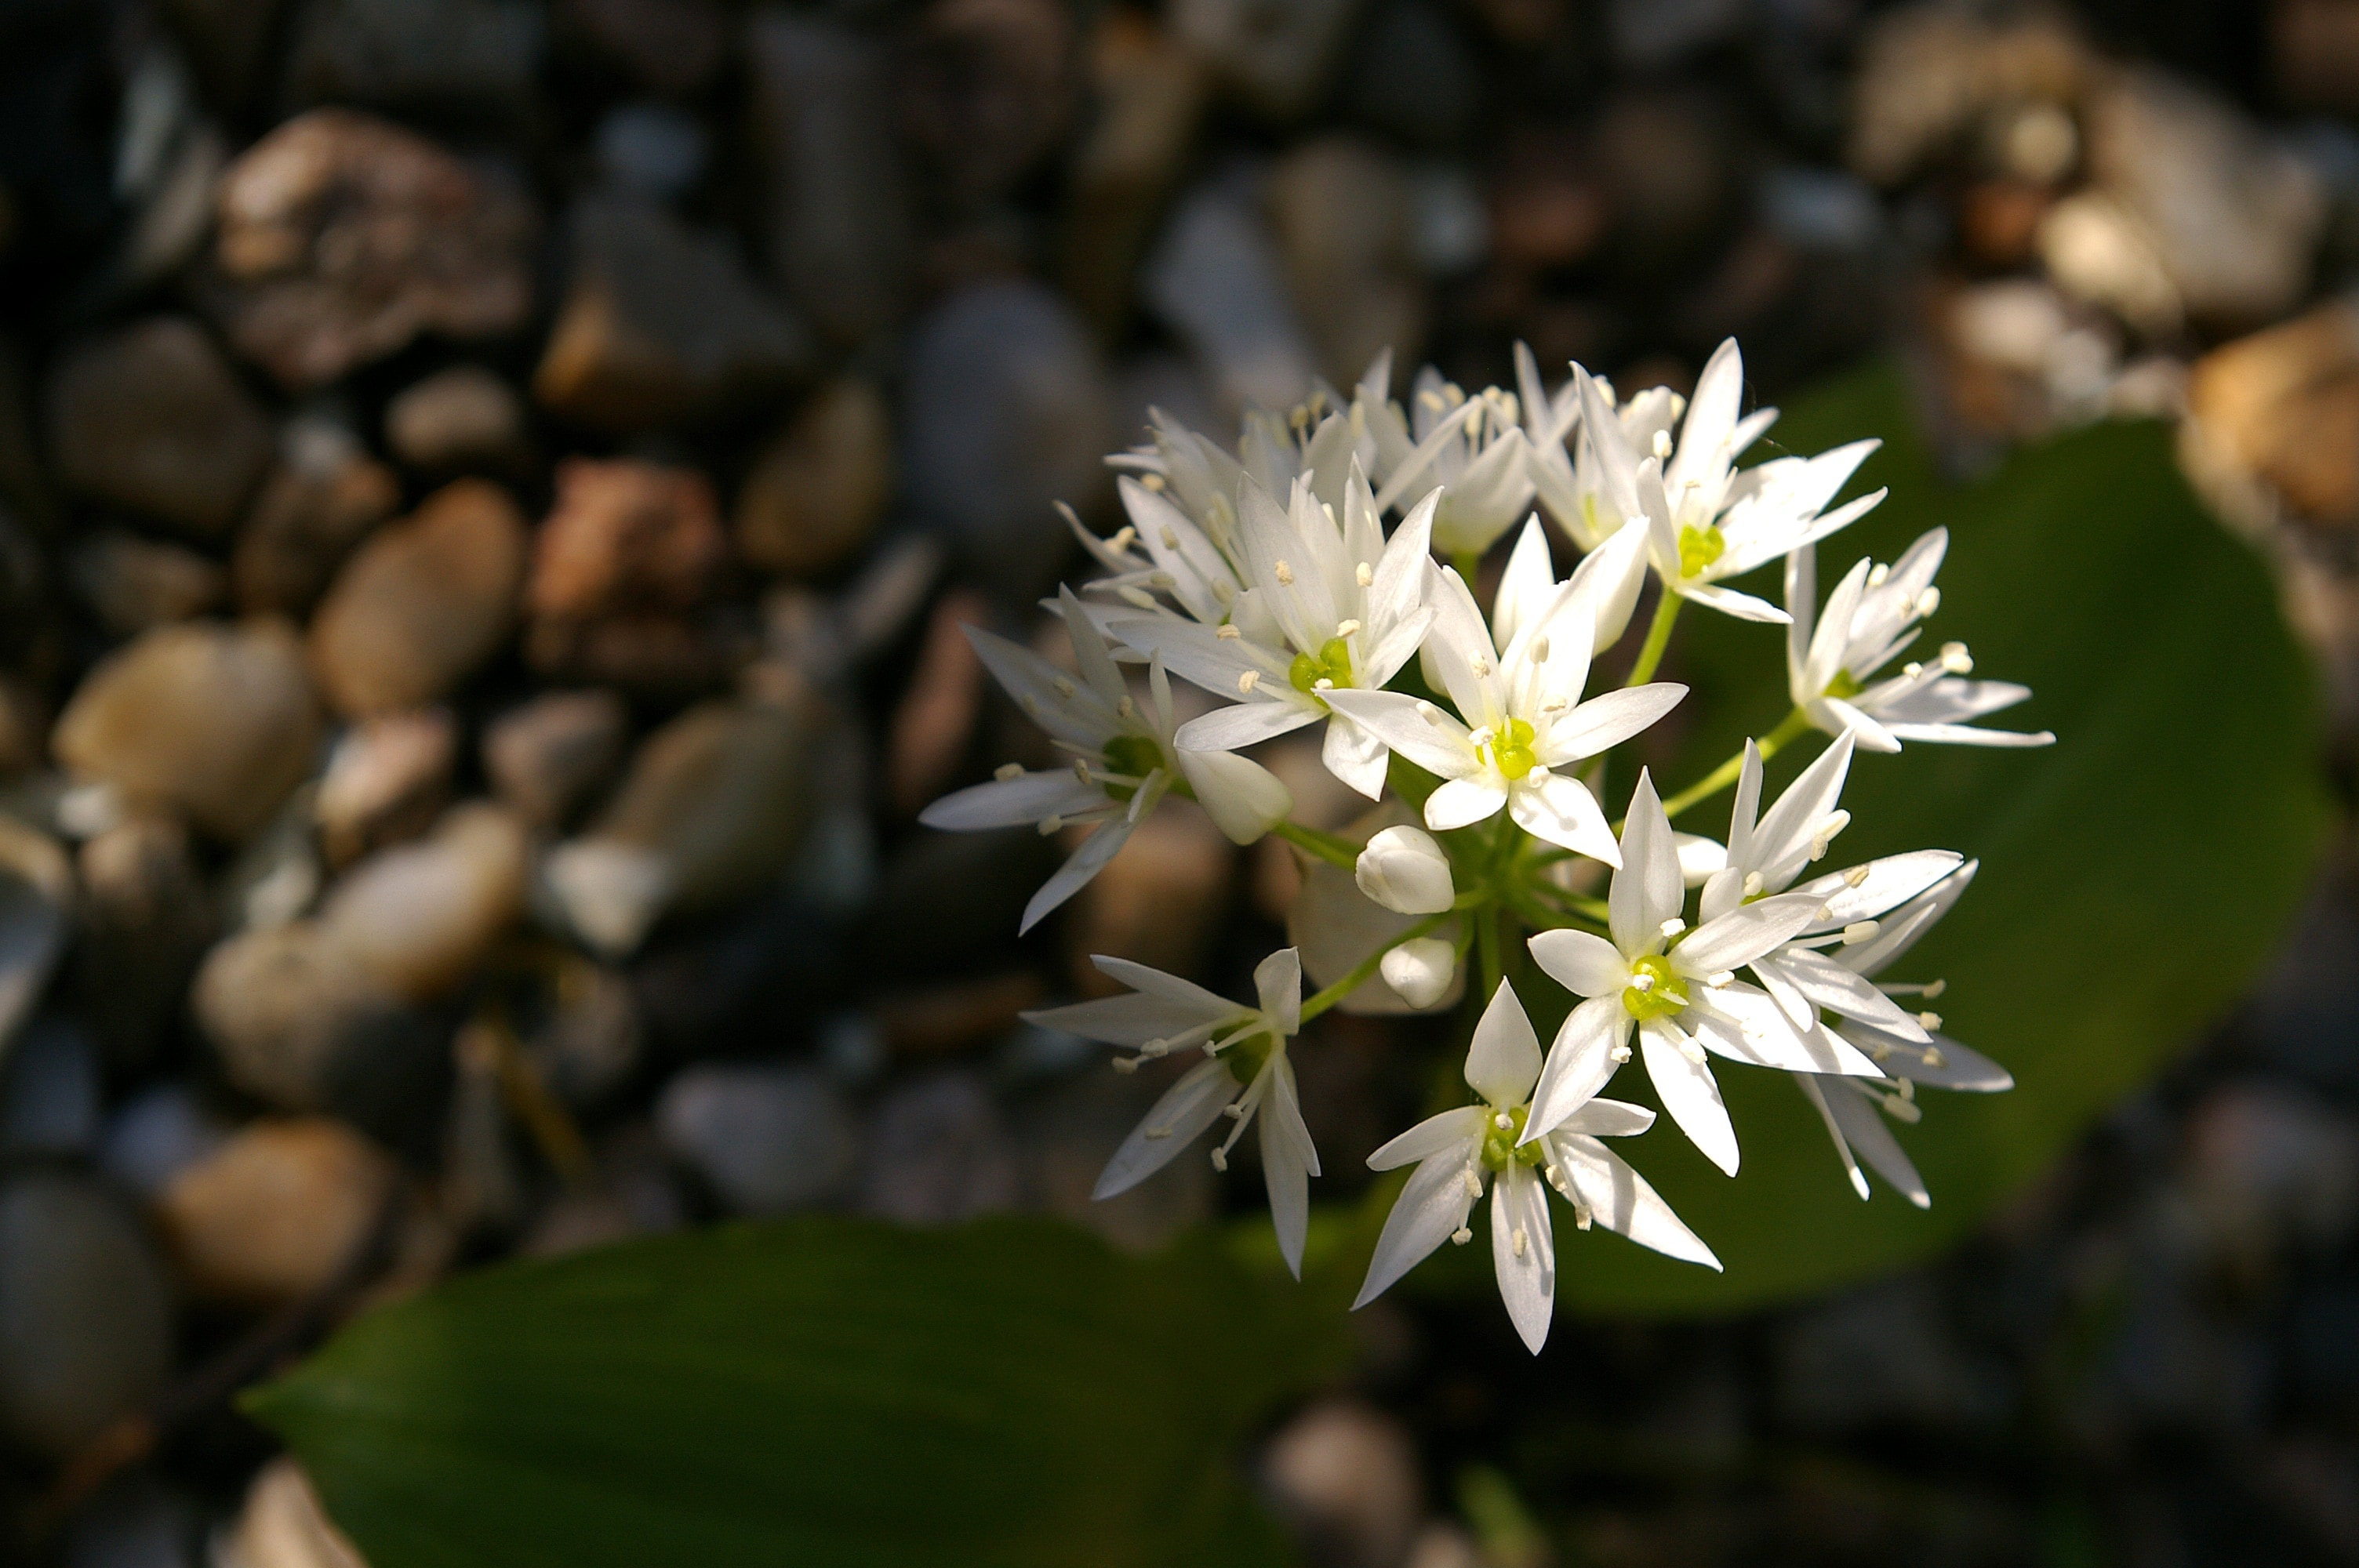 white petaled flower blooming during daytime